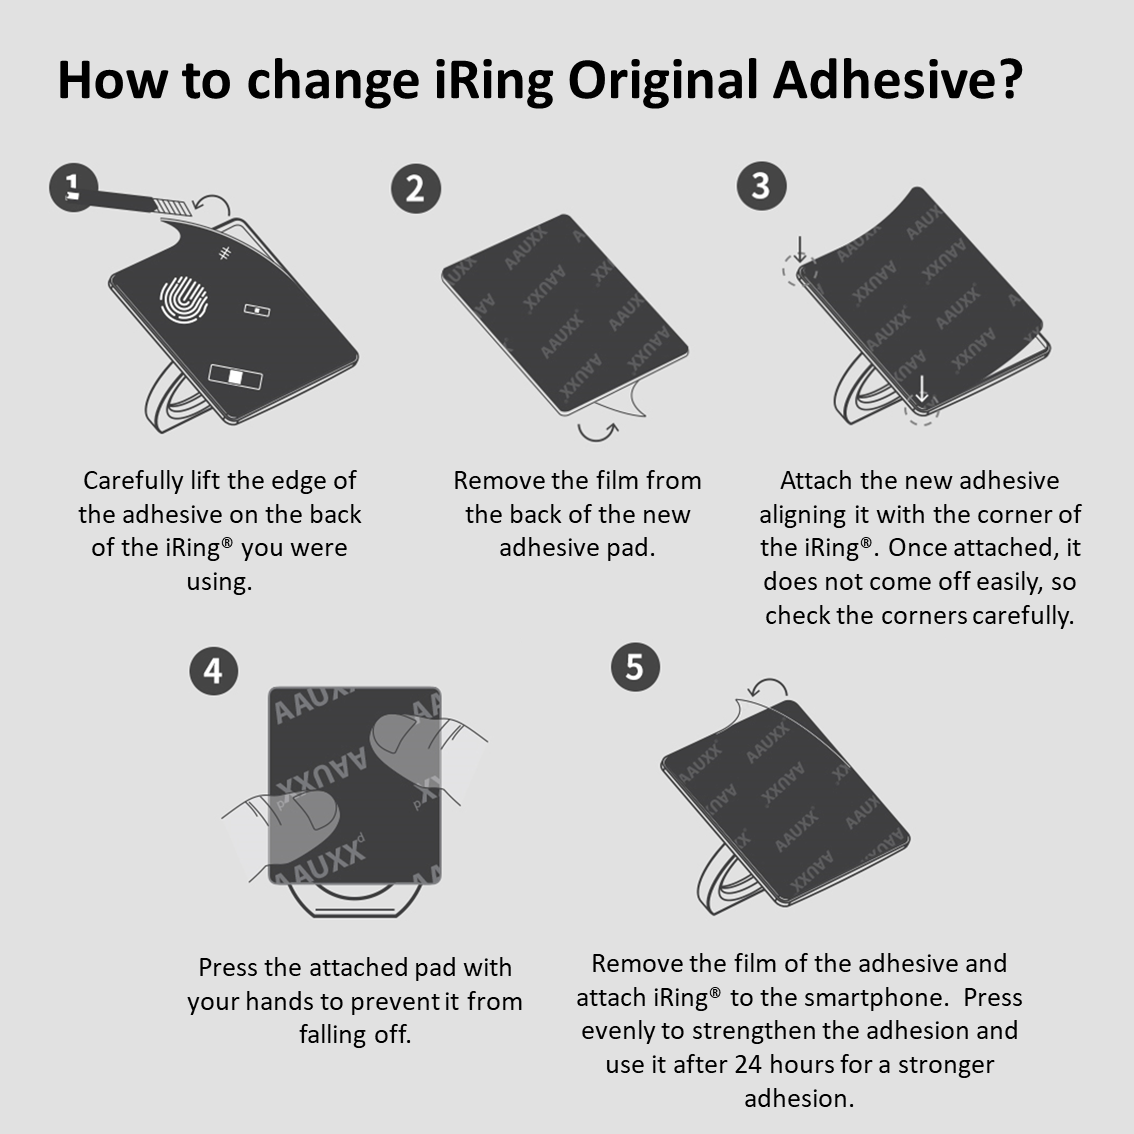 iRing Original Adhesive Replacement